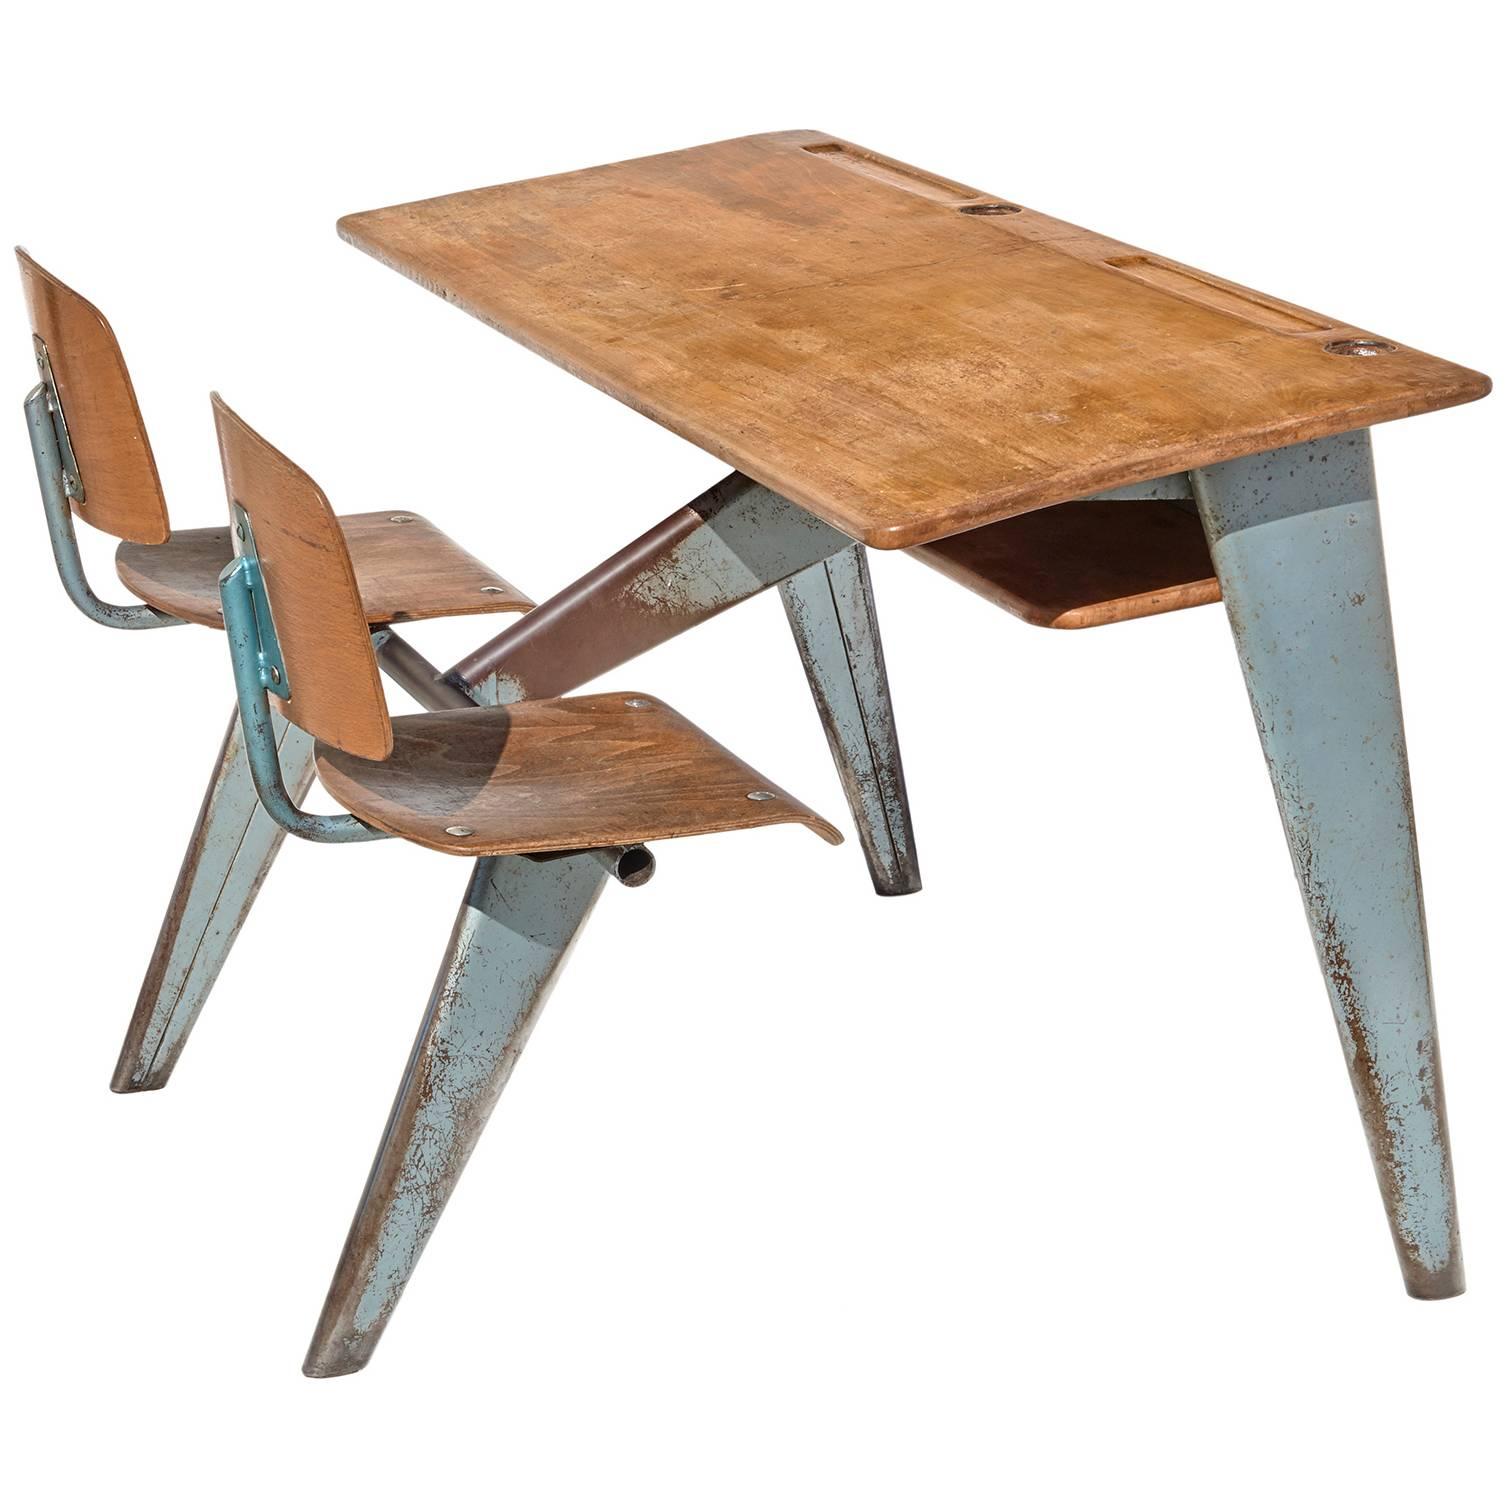 1946 Students' Desk by Jean Prouvé